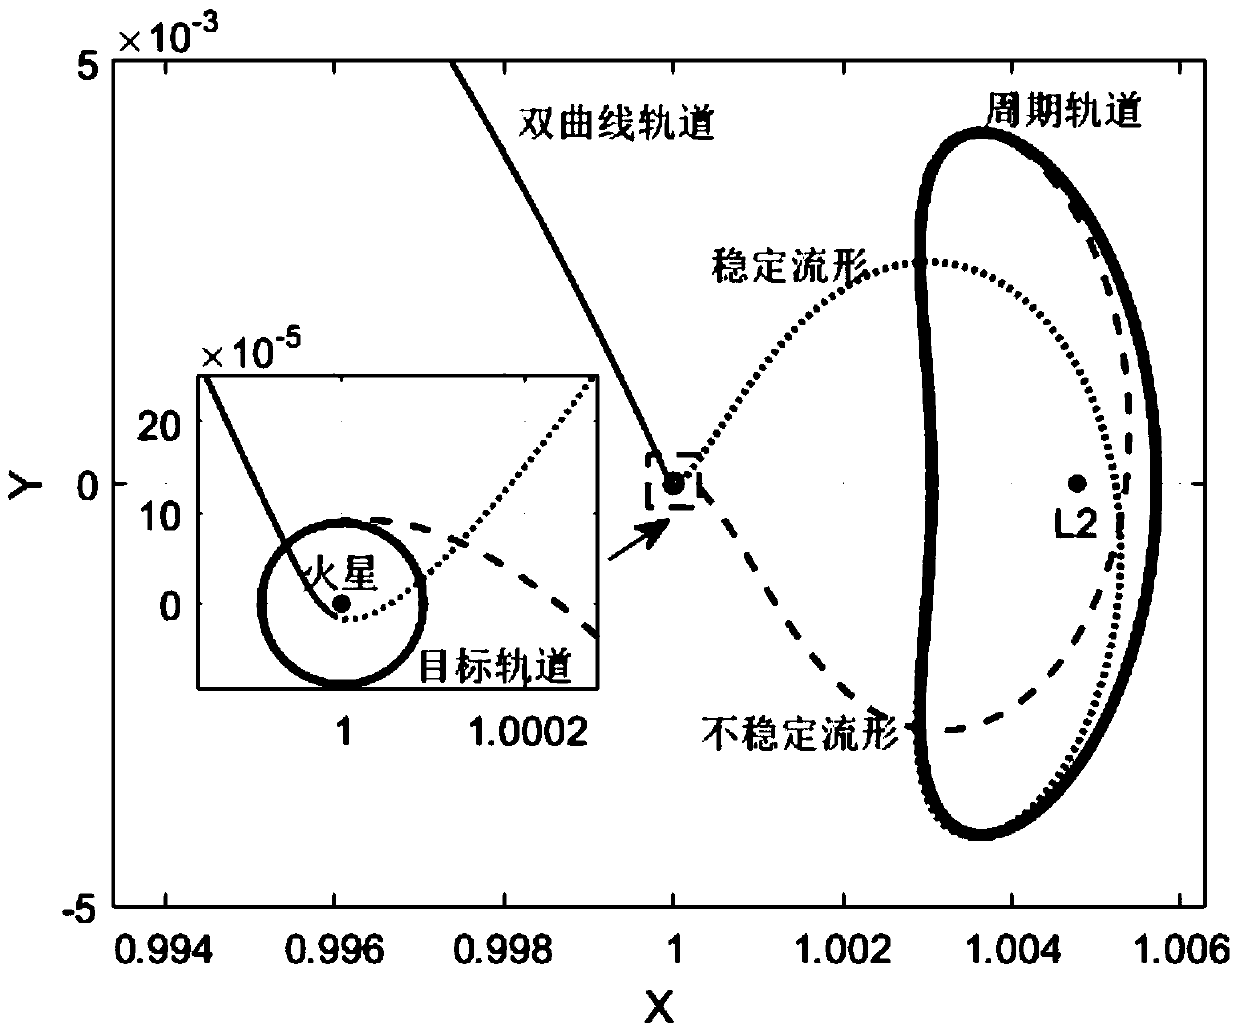 A planetary low energy transfer orbit method based on equilibrium point periodic orbit